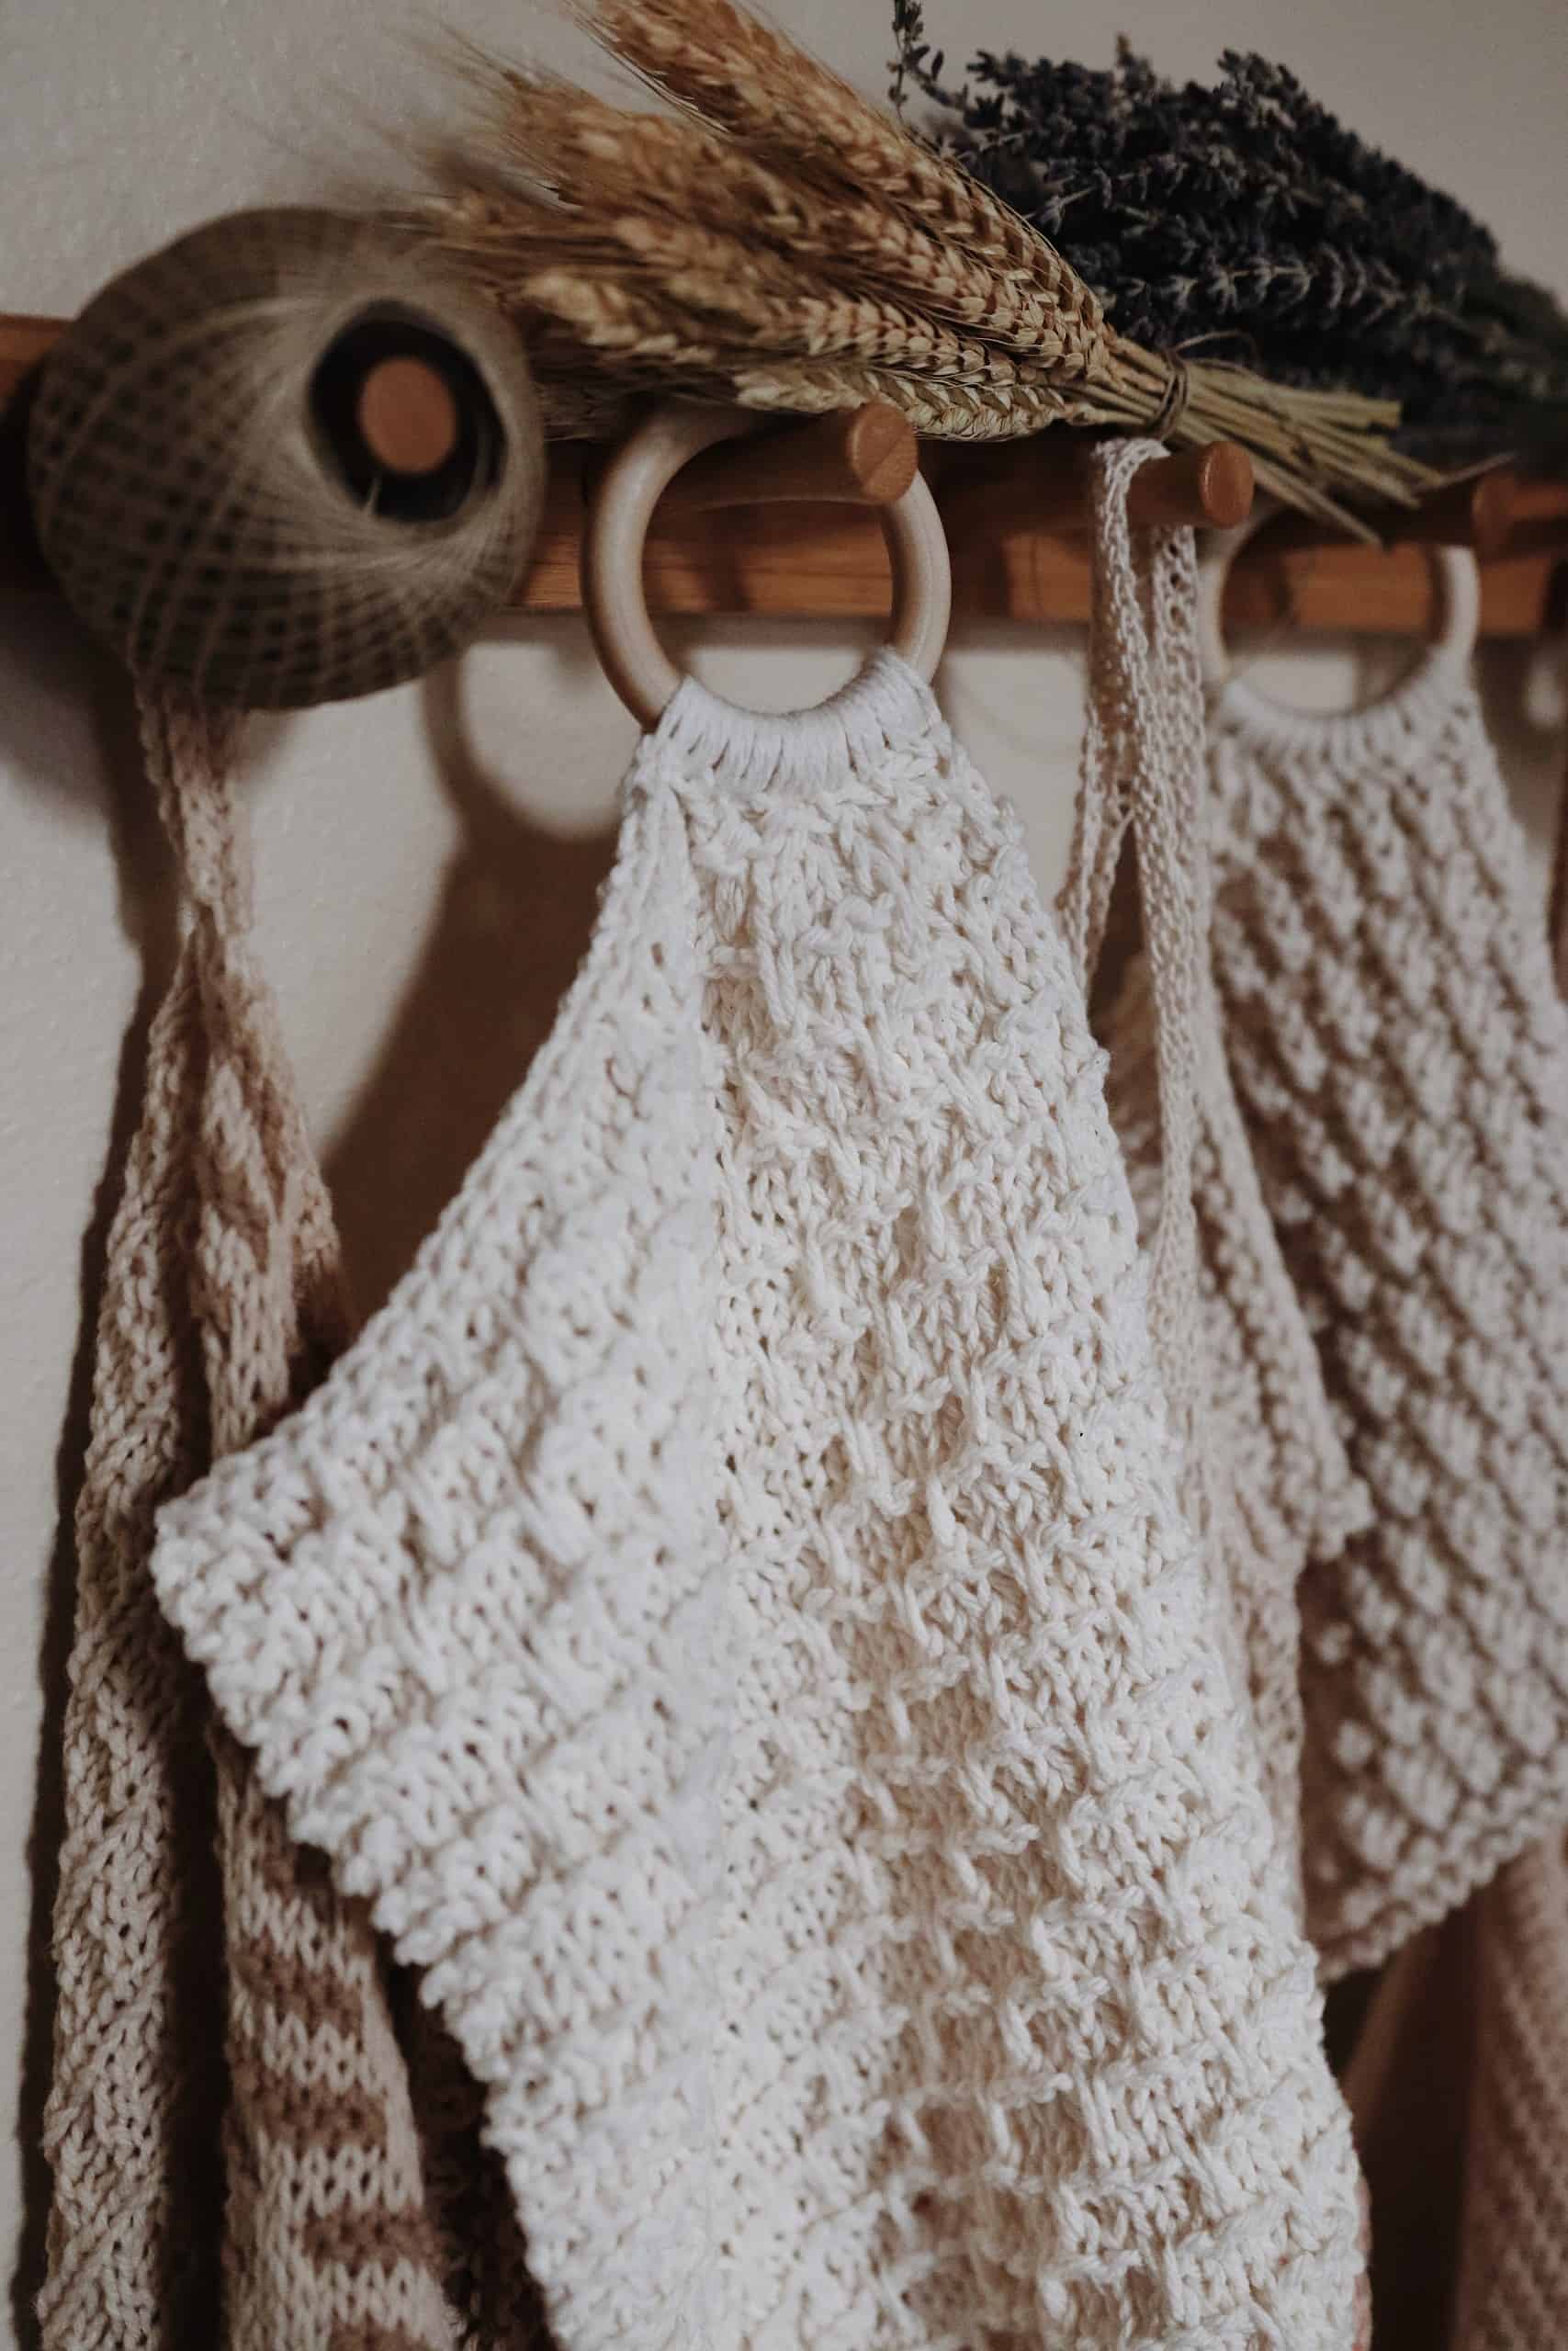 Farmhouse Tea Towel Knitting Pattern, Darling Jadore Eco Friendy